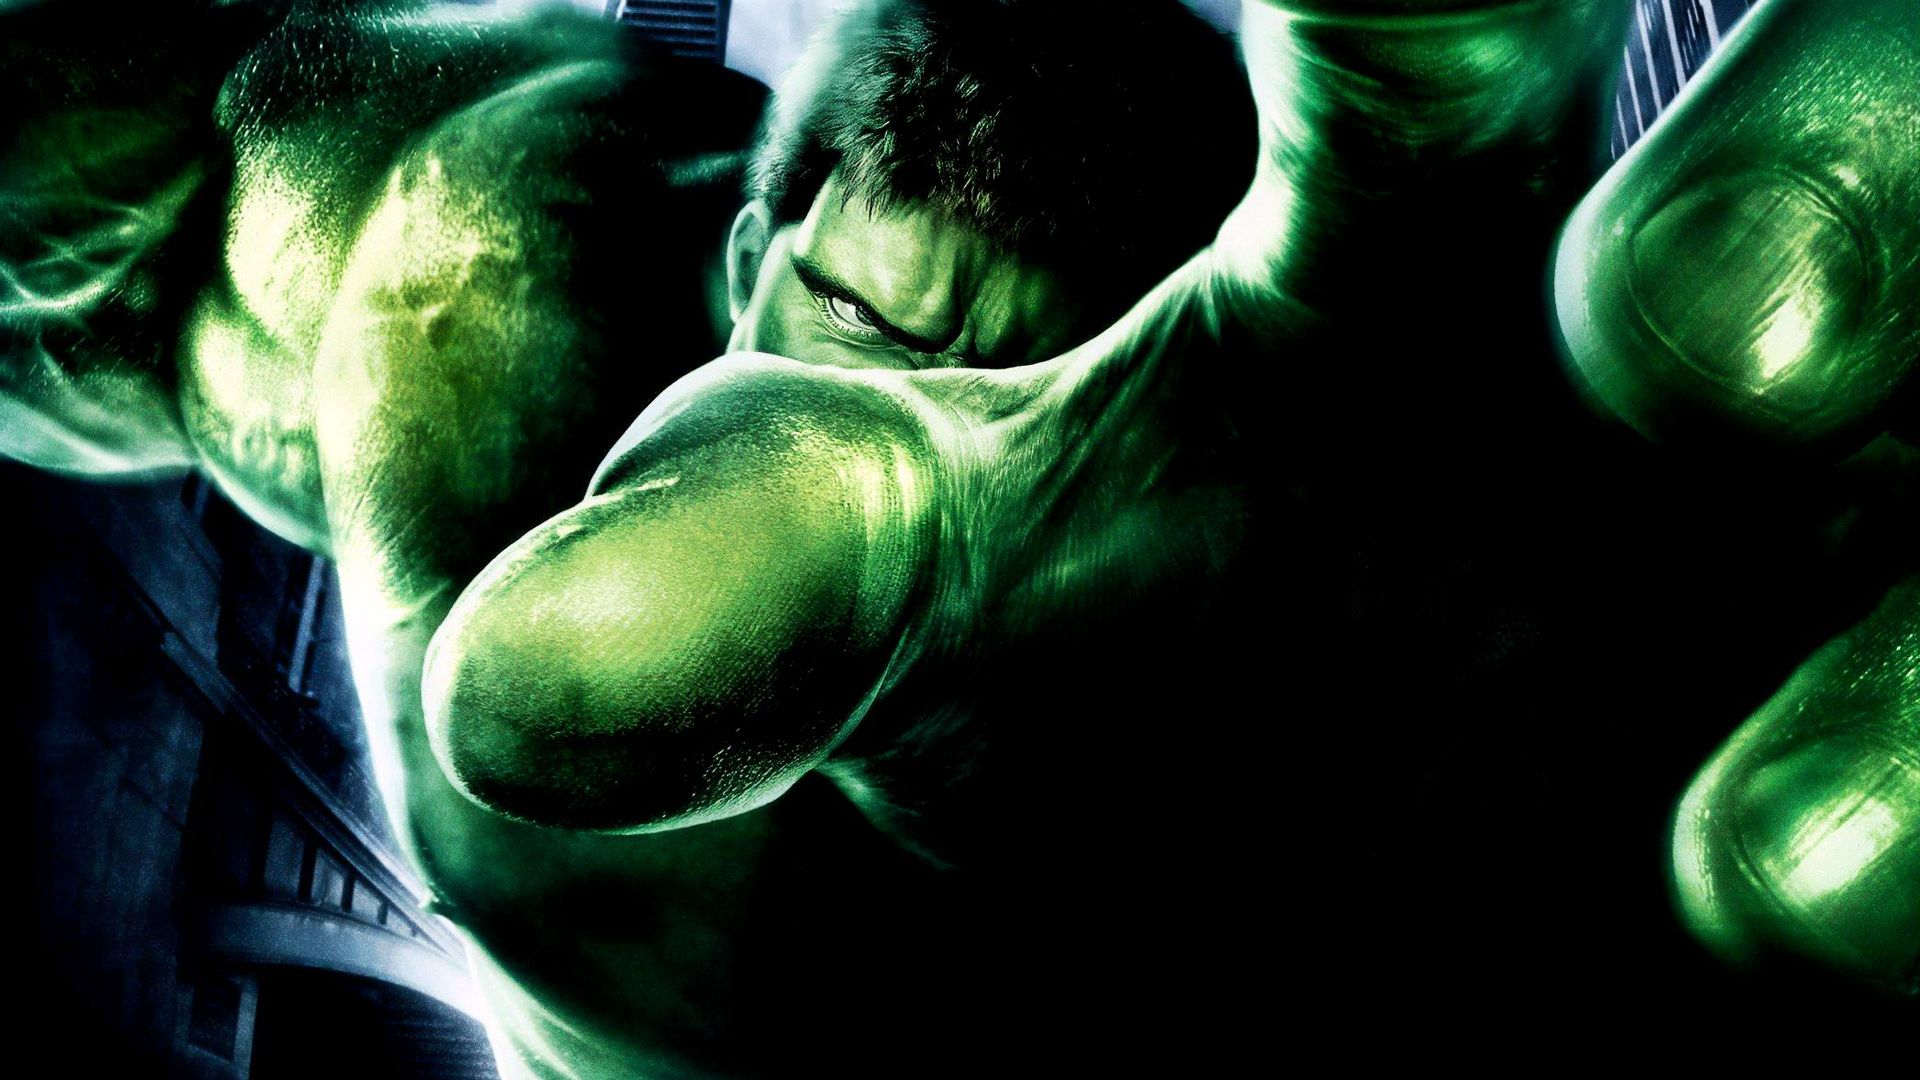 Hulk background